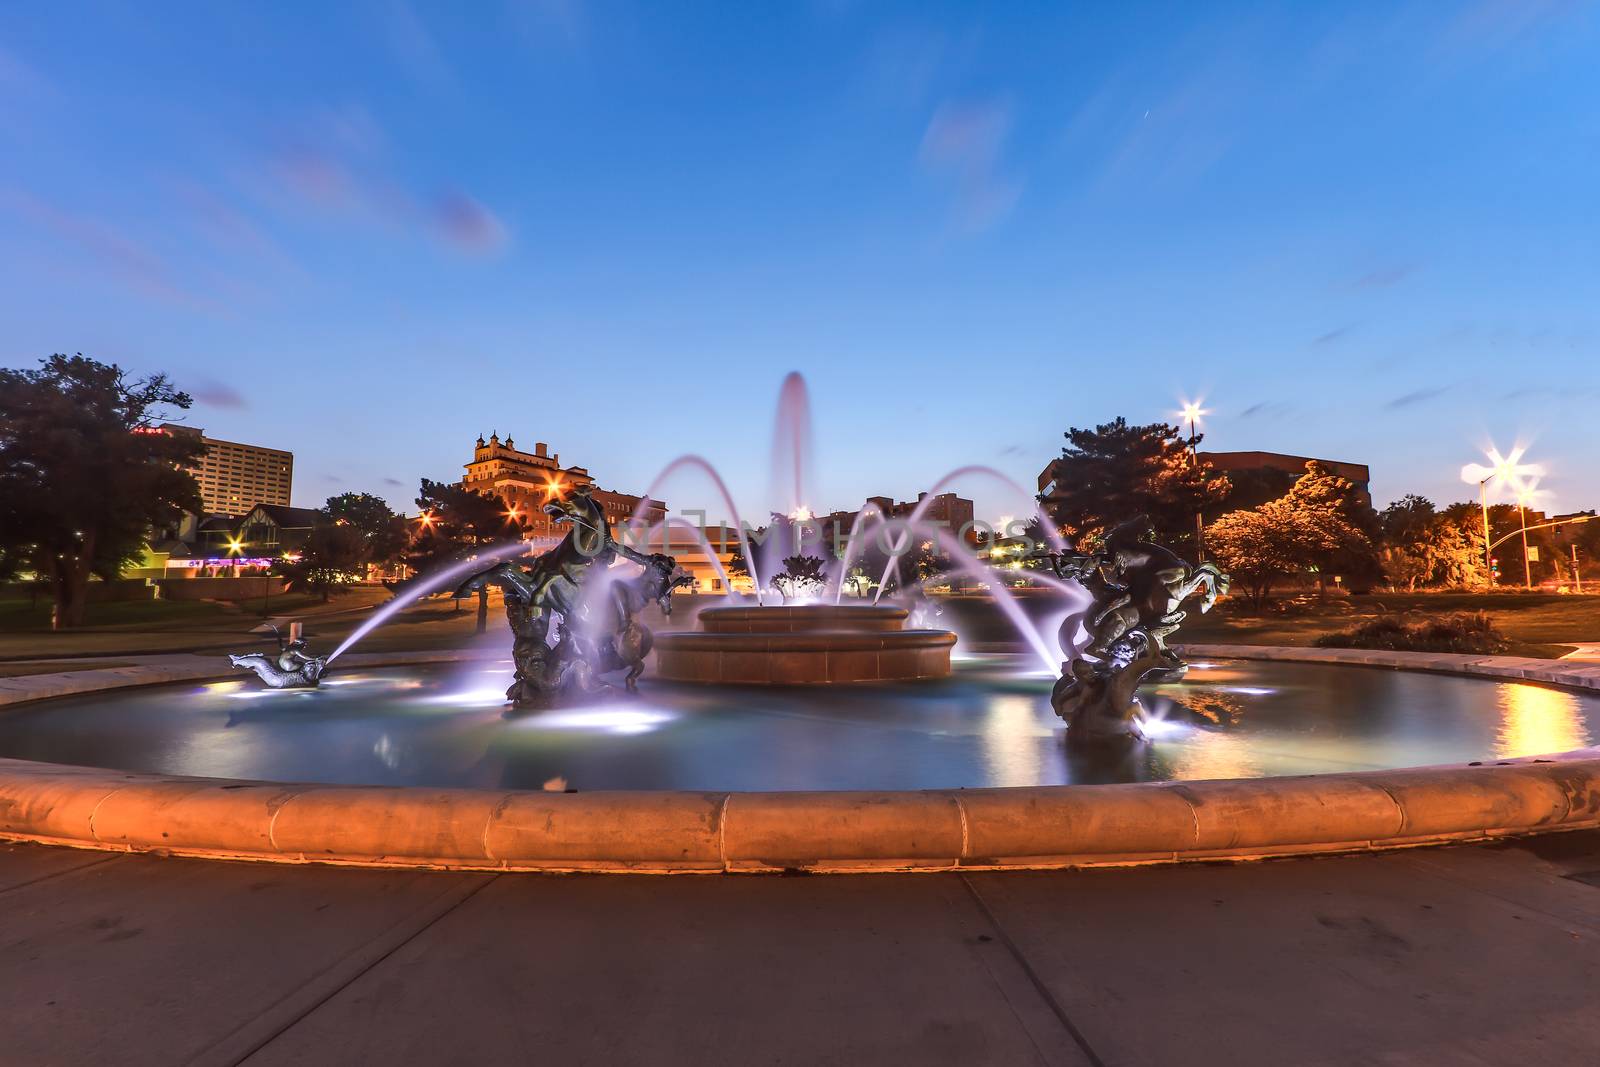 J.C. Nichols Memorial Fountain by TommyBrison